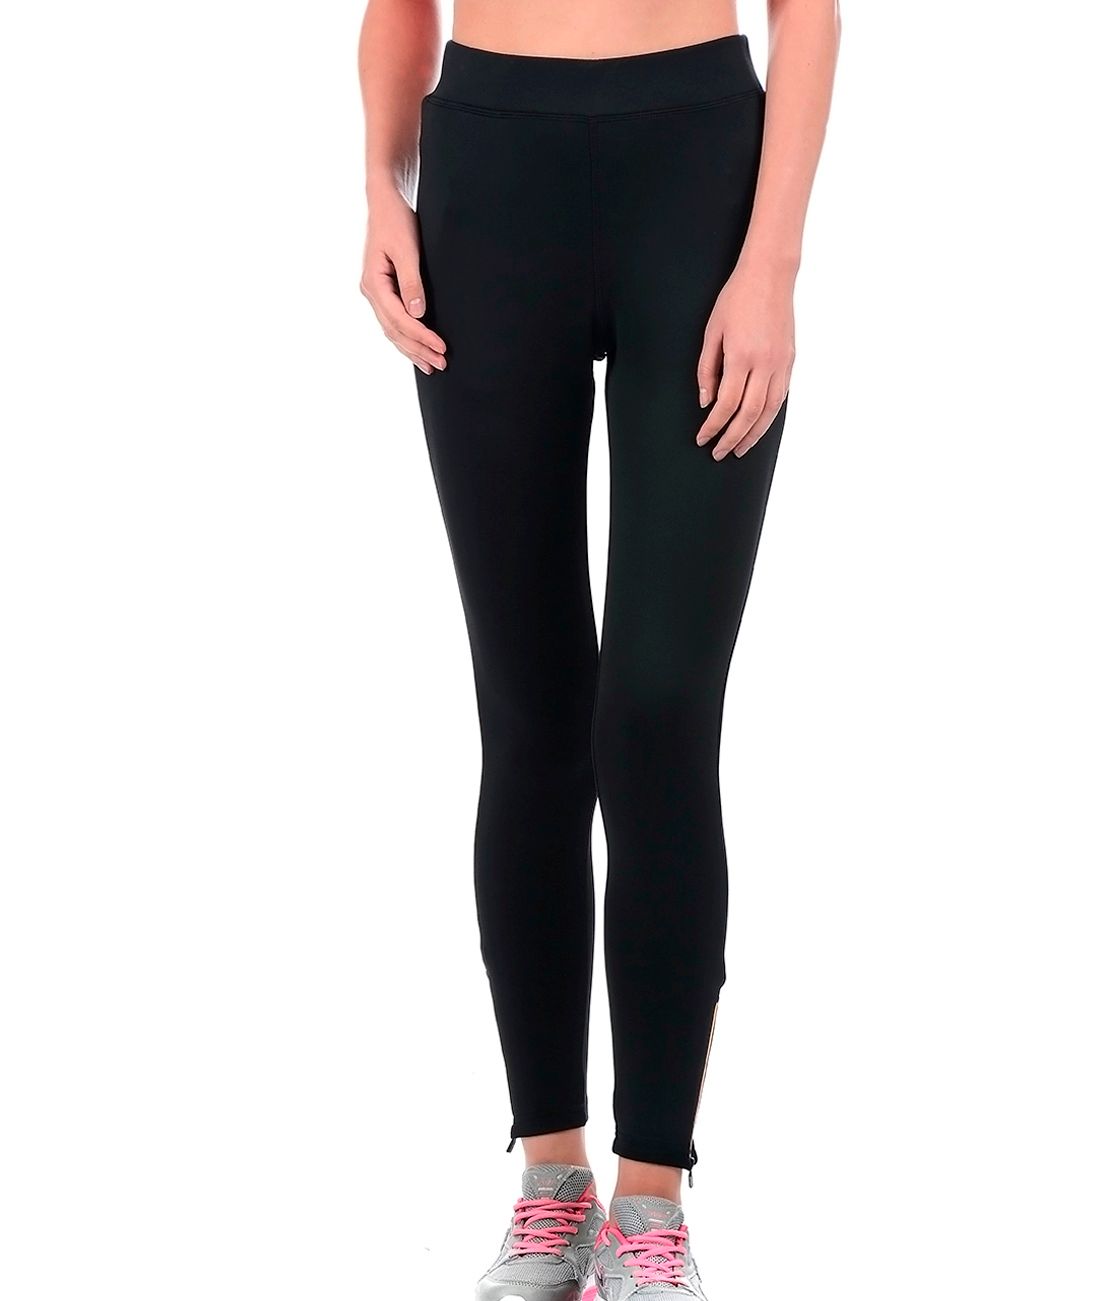 Buy Easy 2 Wear Womens Track Pant (Sizes XL,2XL,3XL) Plus Sizes. (XX-Large)  Dark Grey at Amazon.in